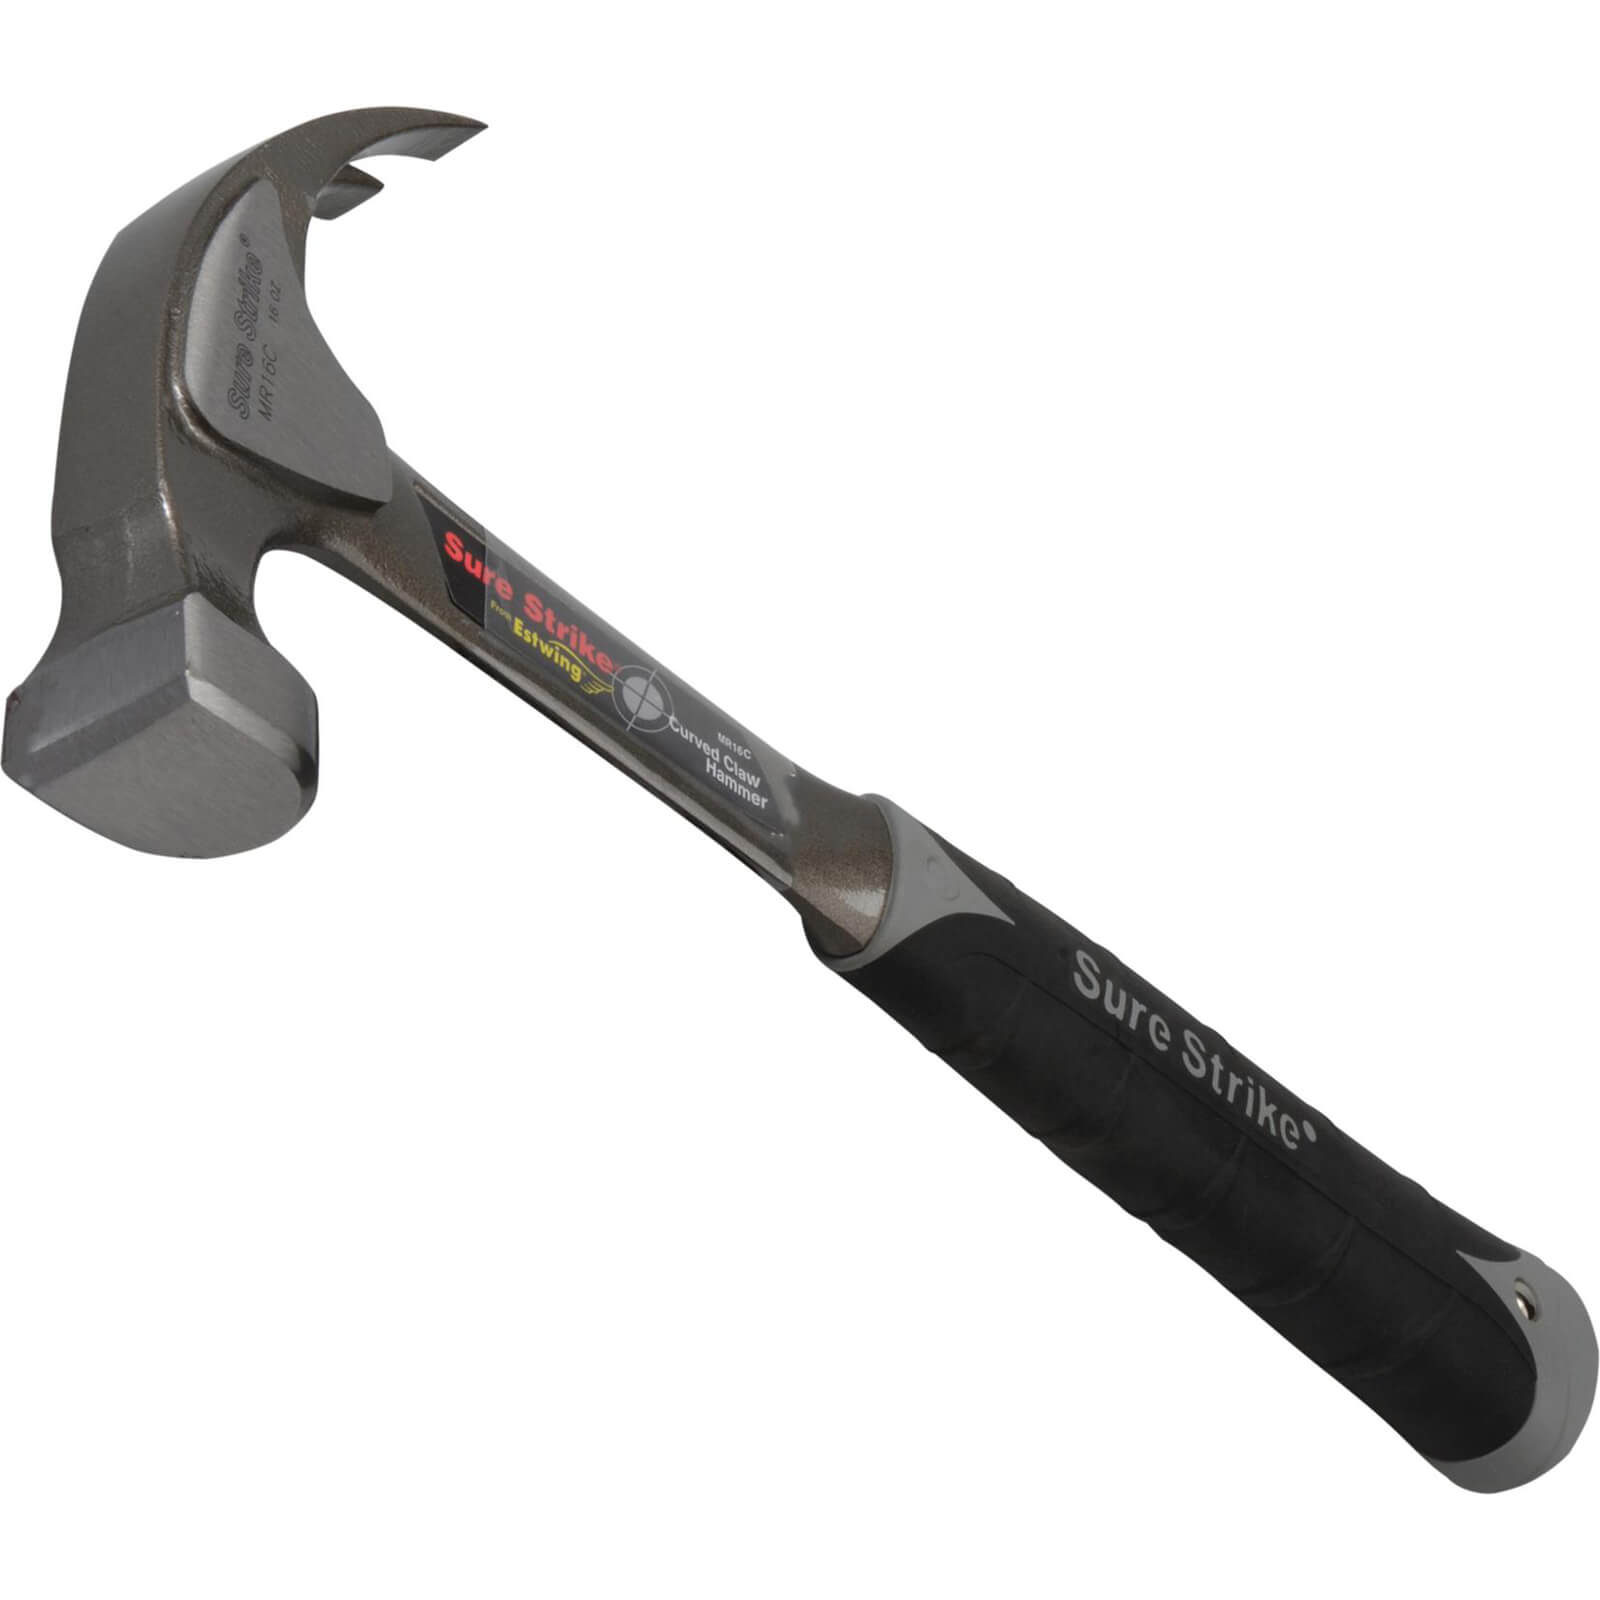 Estwing All Steel Surestrike Curved Claw Hammer 450g